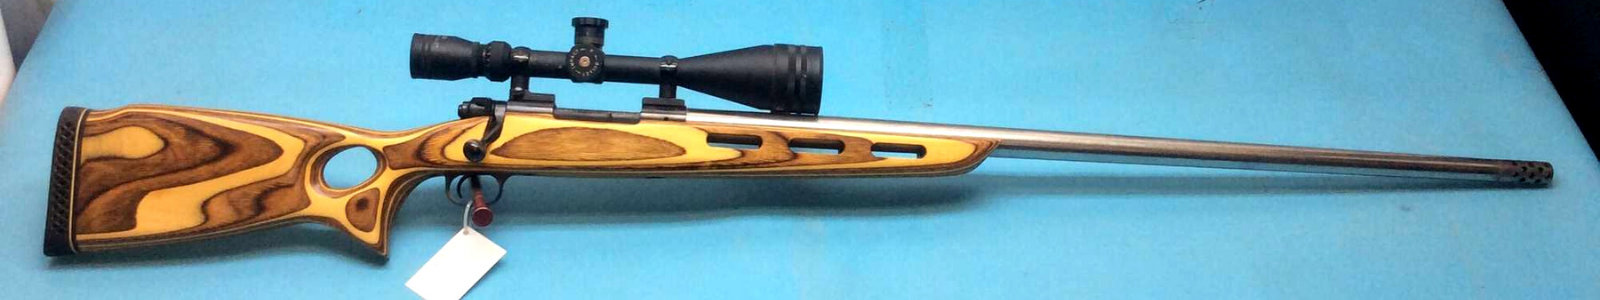 tomahawk rifle